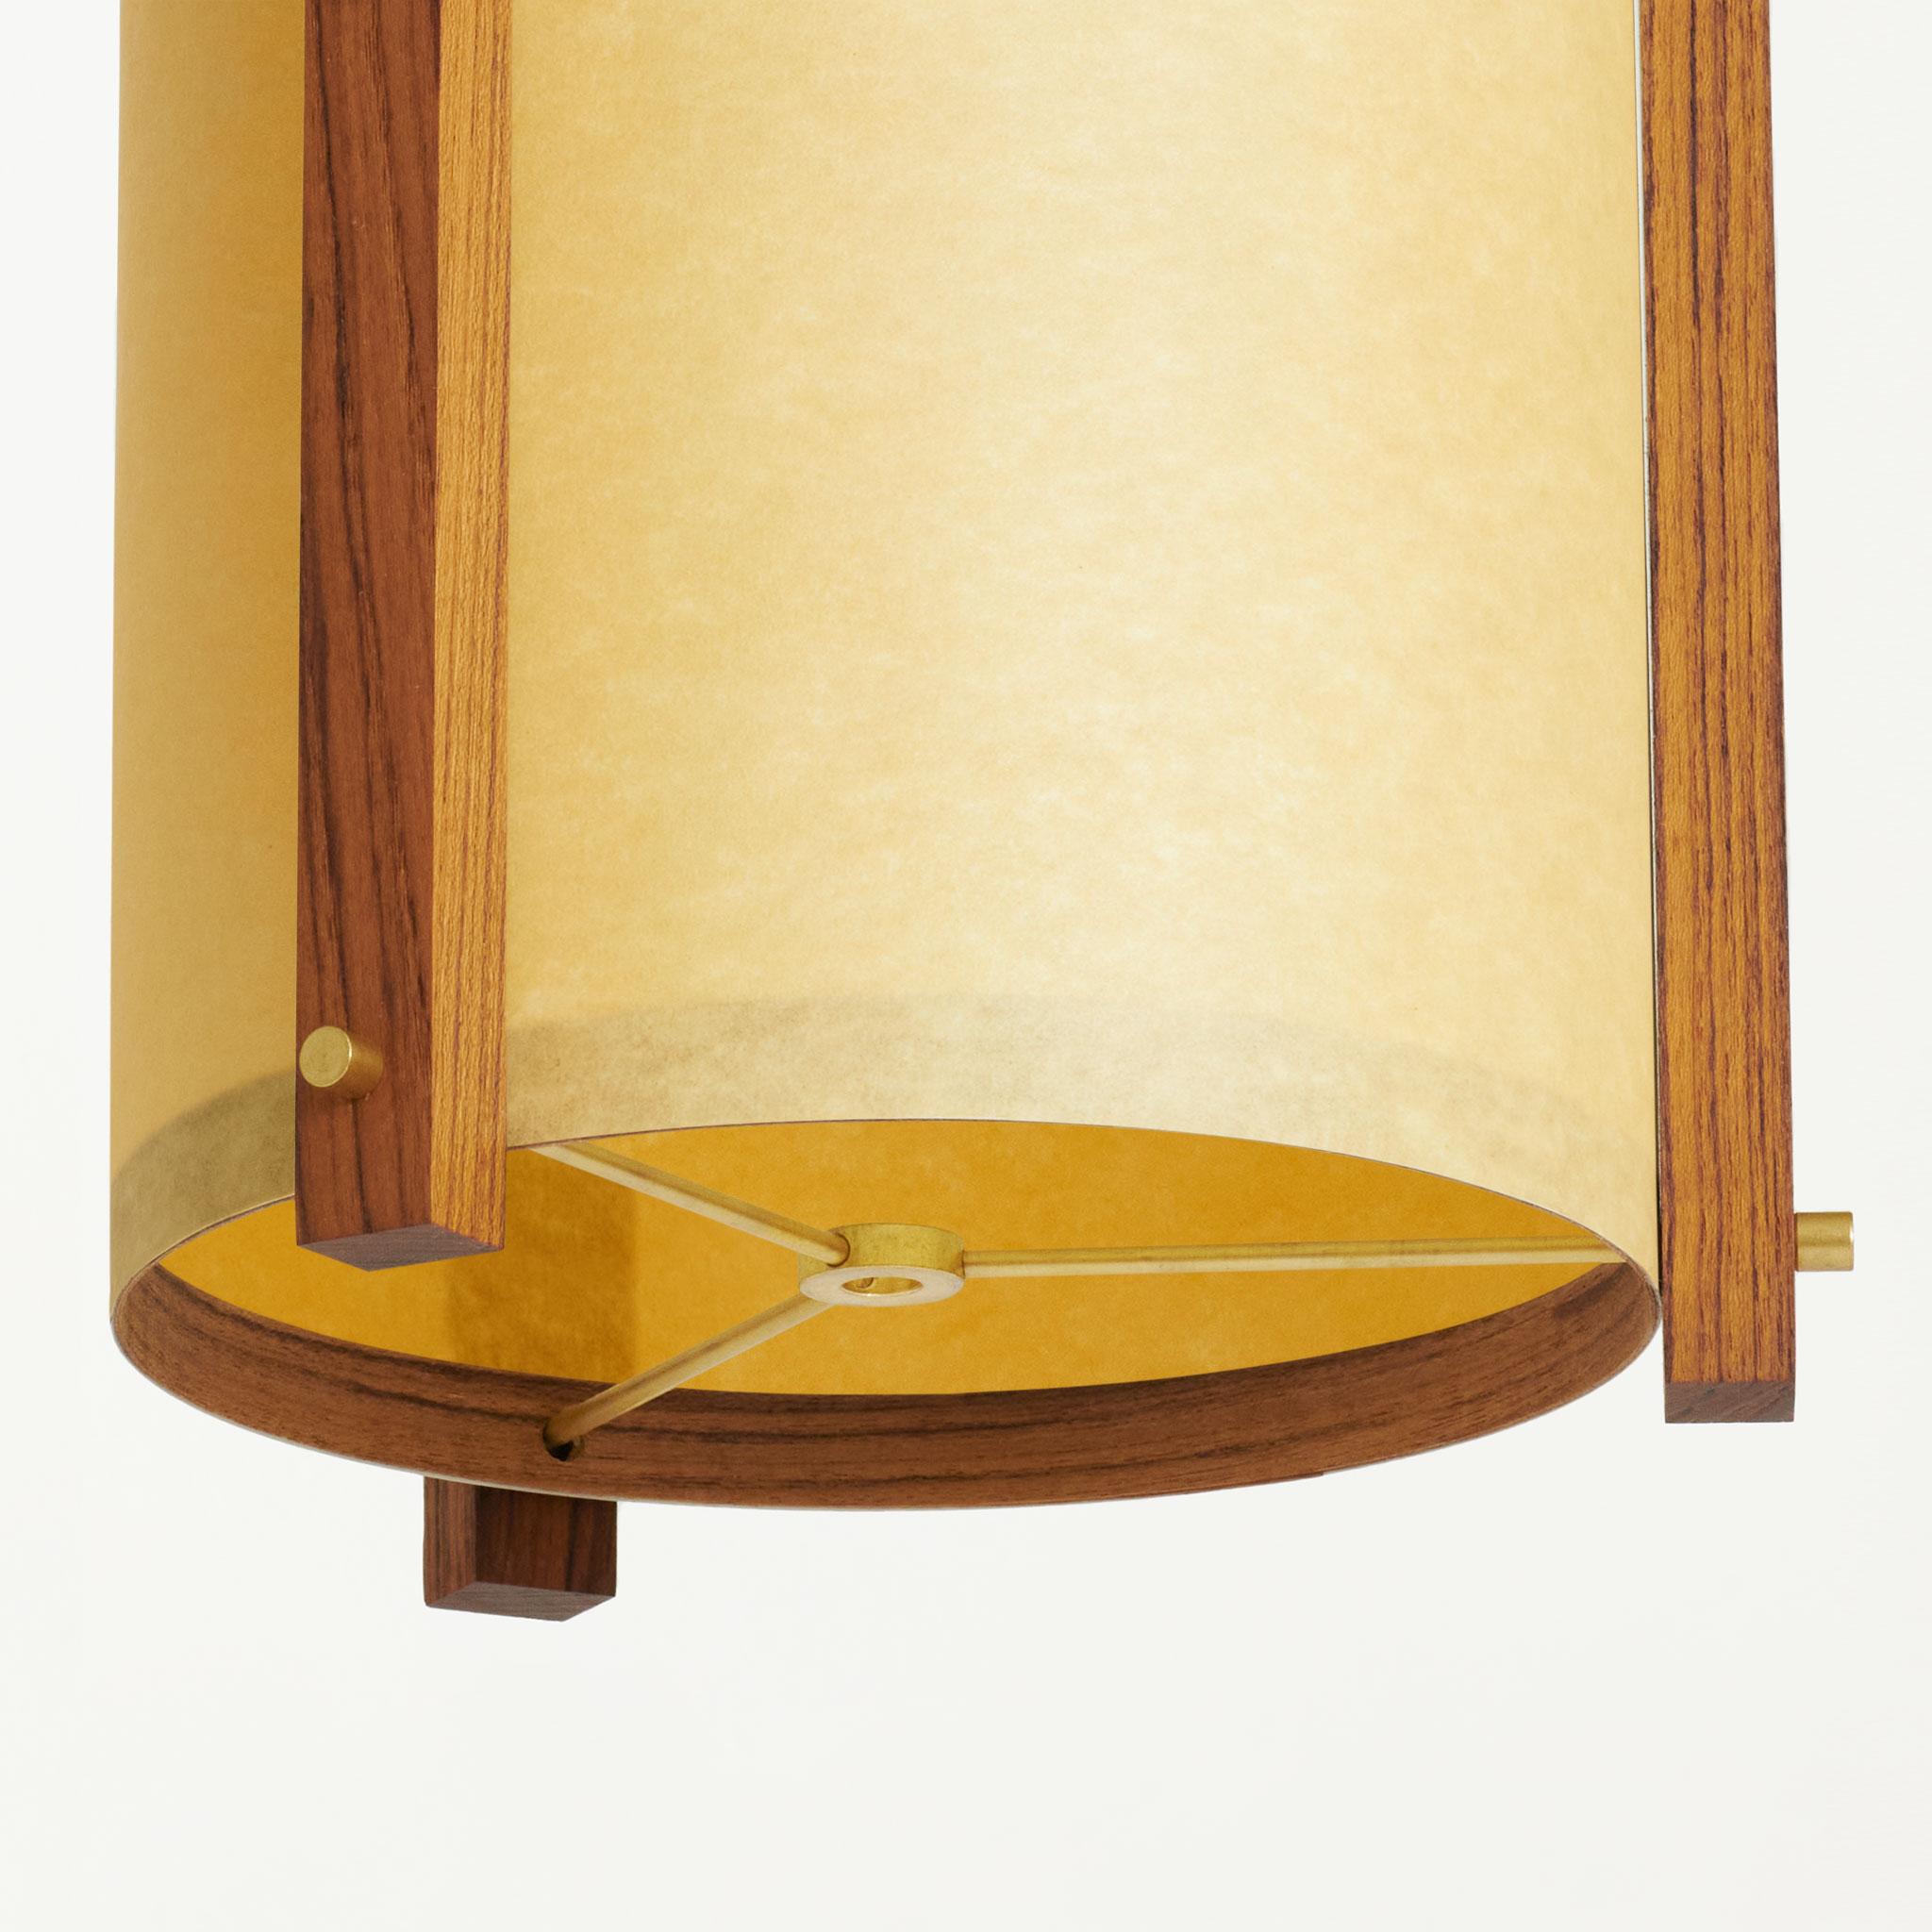 American Japanese inspired mid-century Teak and Brass Pendant Lamp - medium For Sale